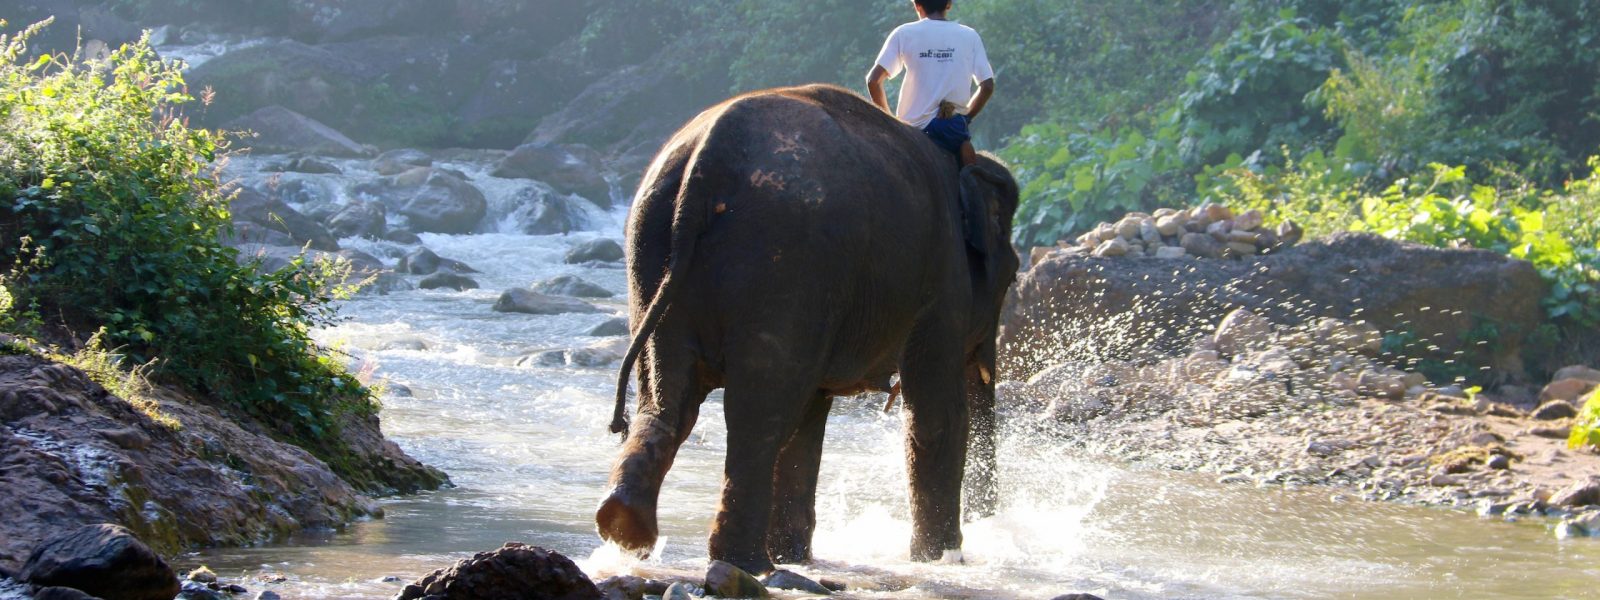 Elephants & Oozies - Green Hill Valley - Kalaw - Sampan Travel